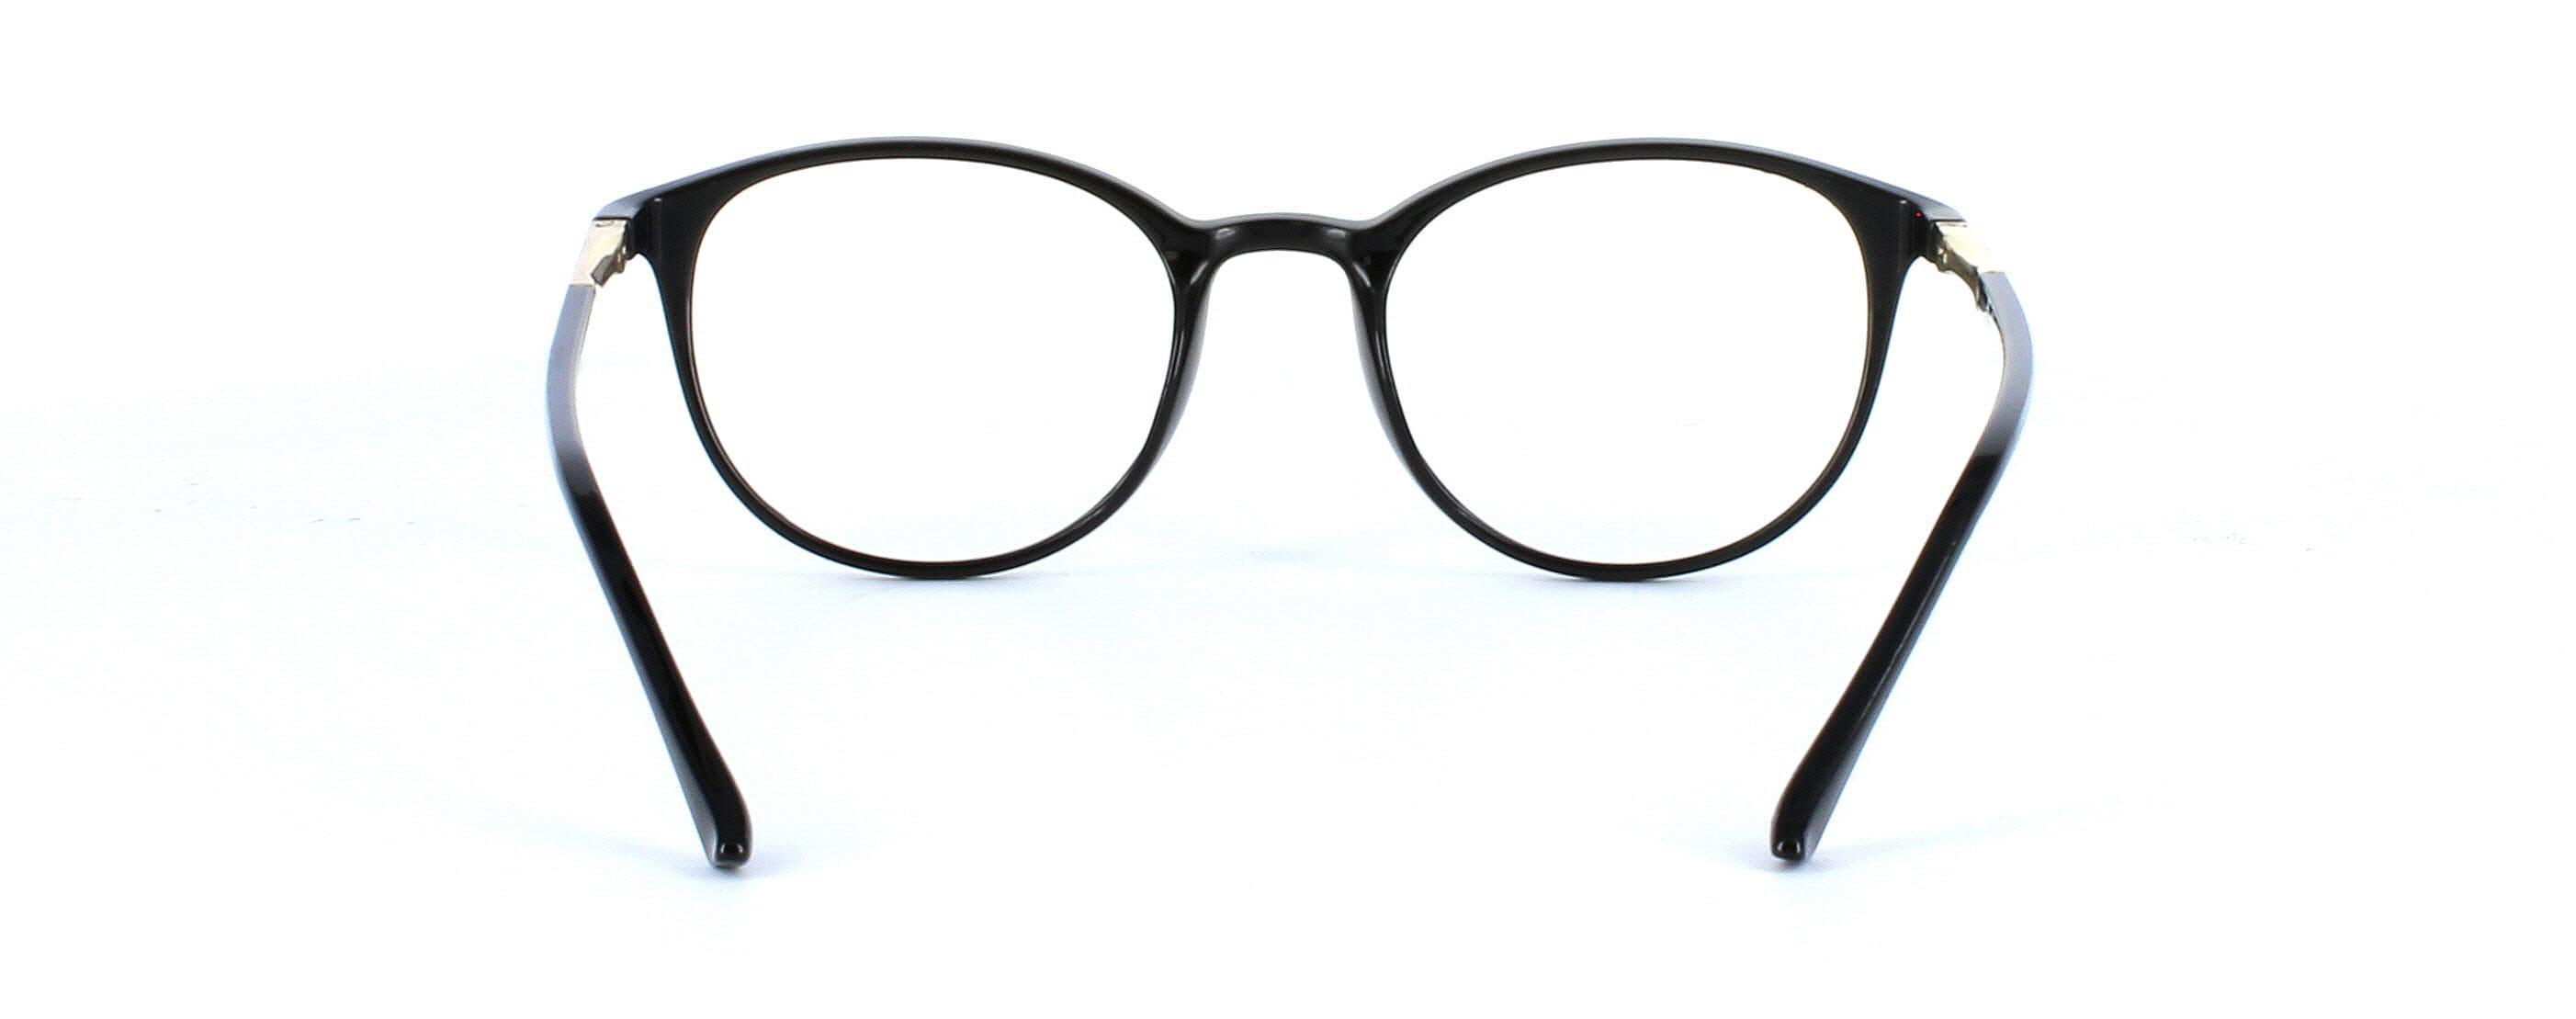 Mensa - Ladies black round shaped plastic glasses - image view 3